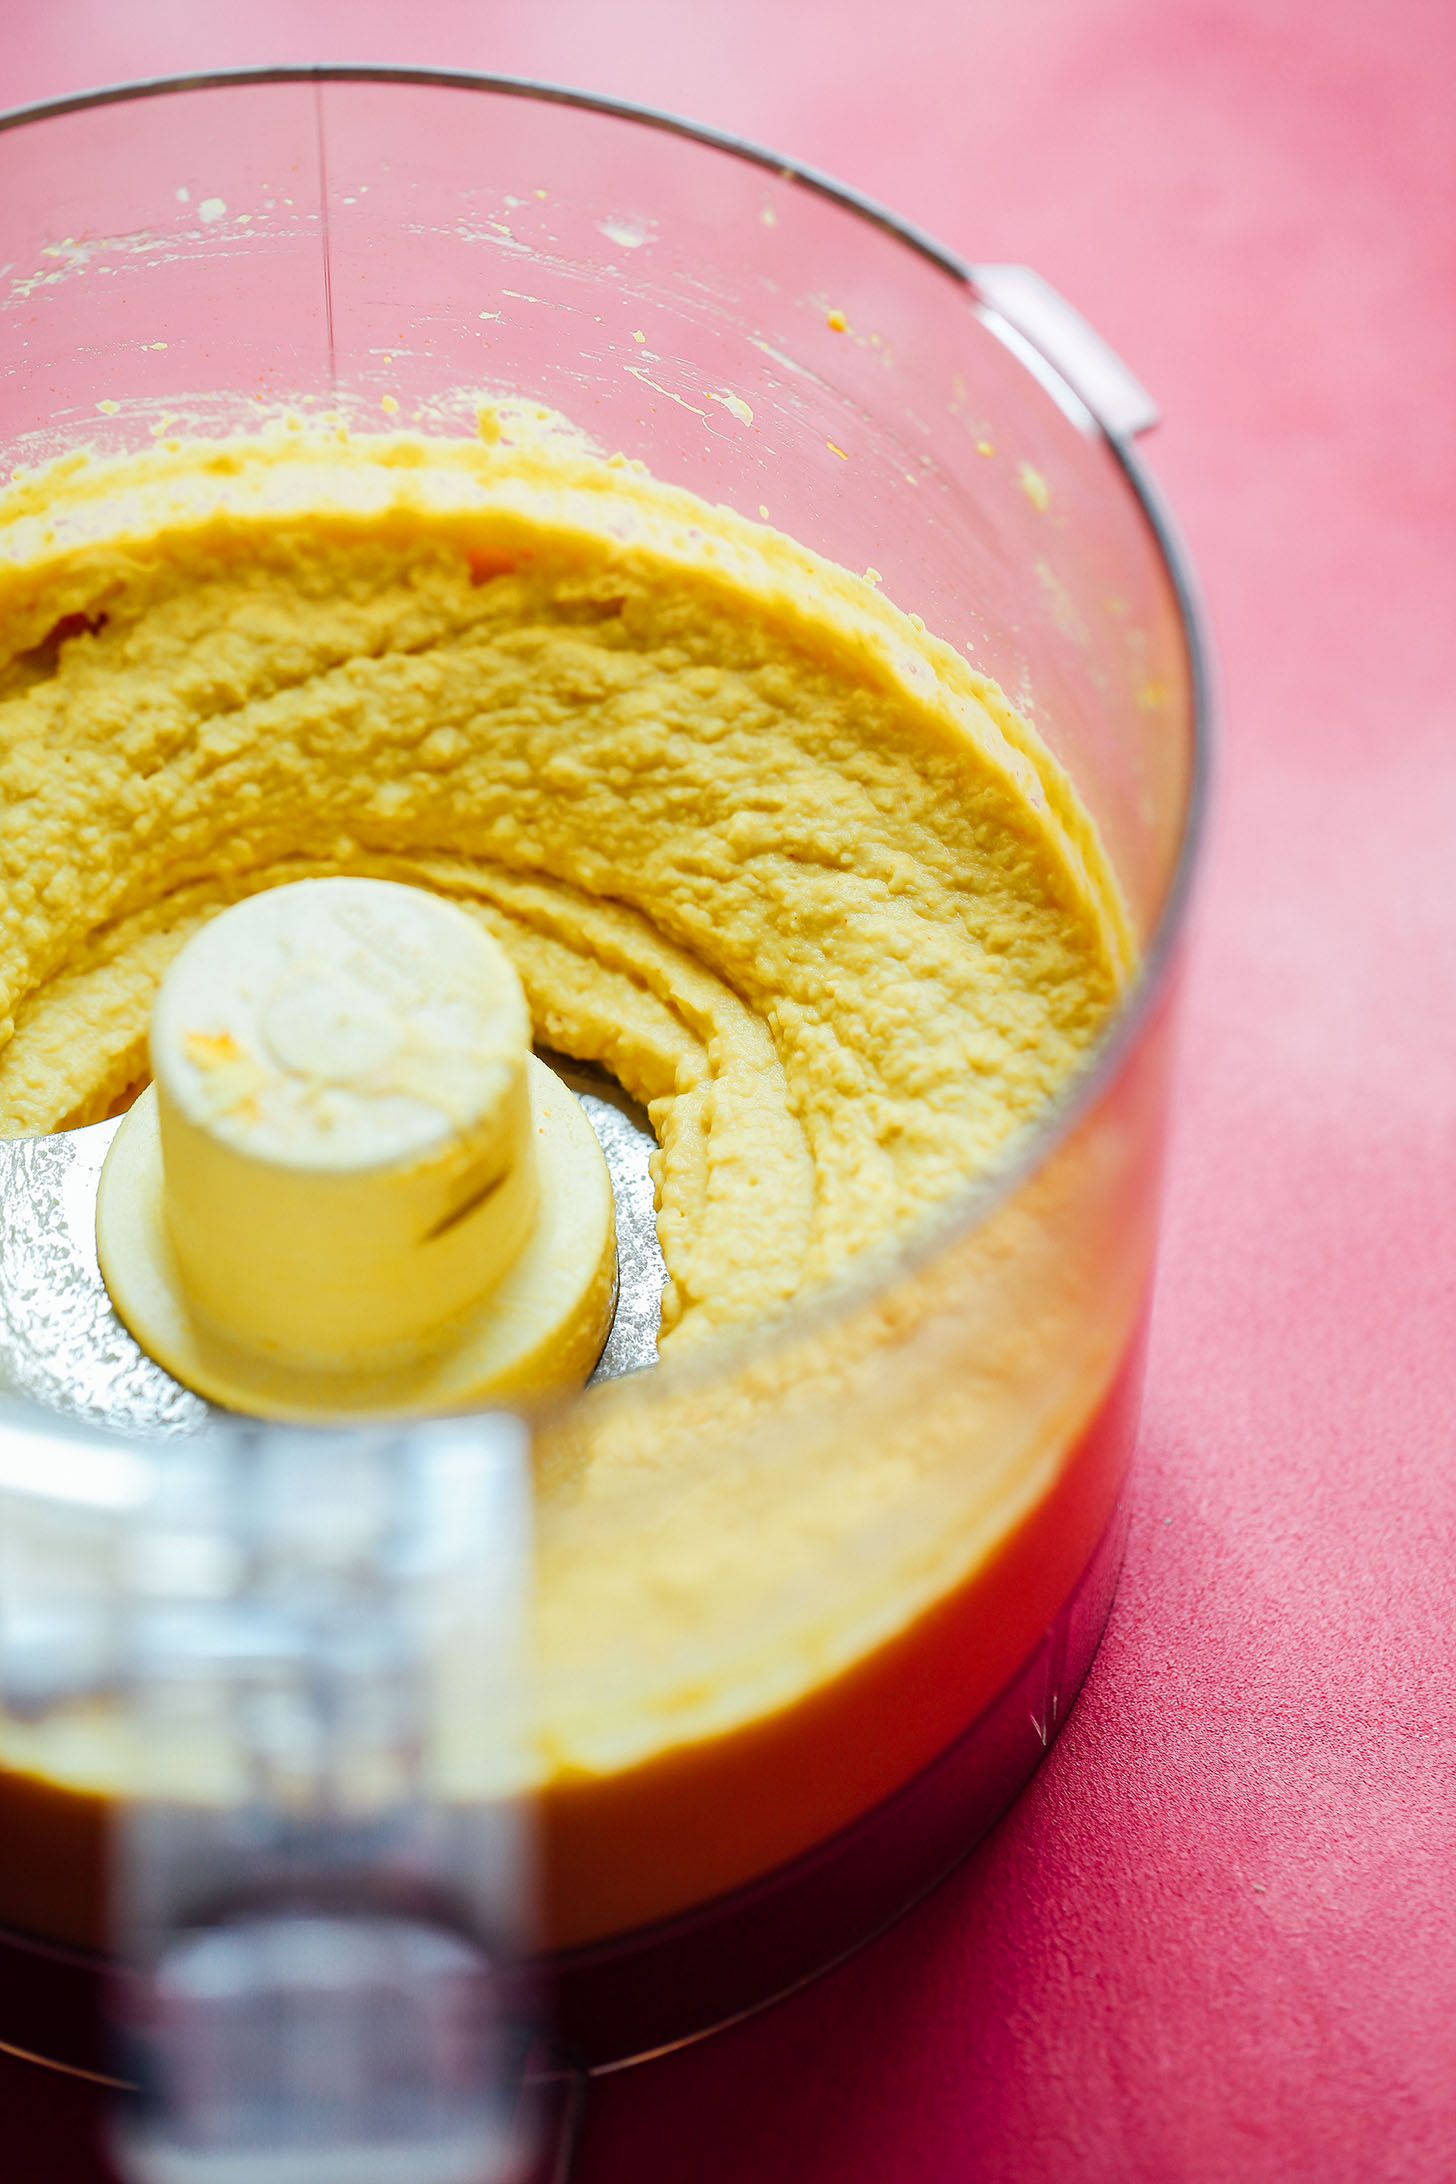 Food processor containing our homemade Golden Goddess Hummus recipe